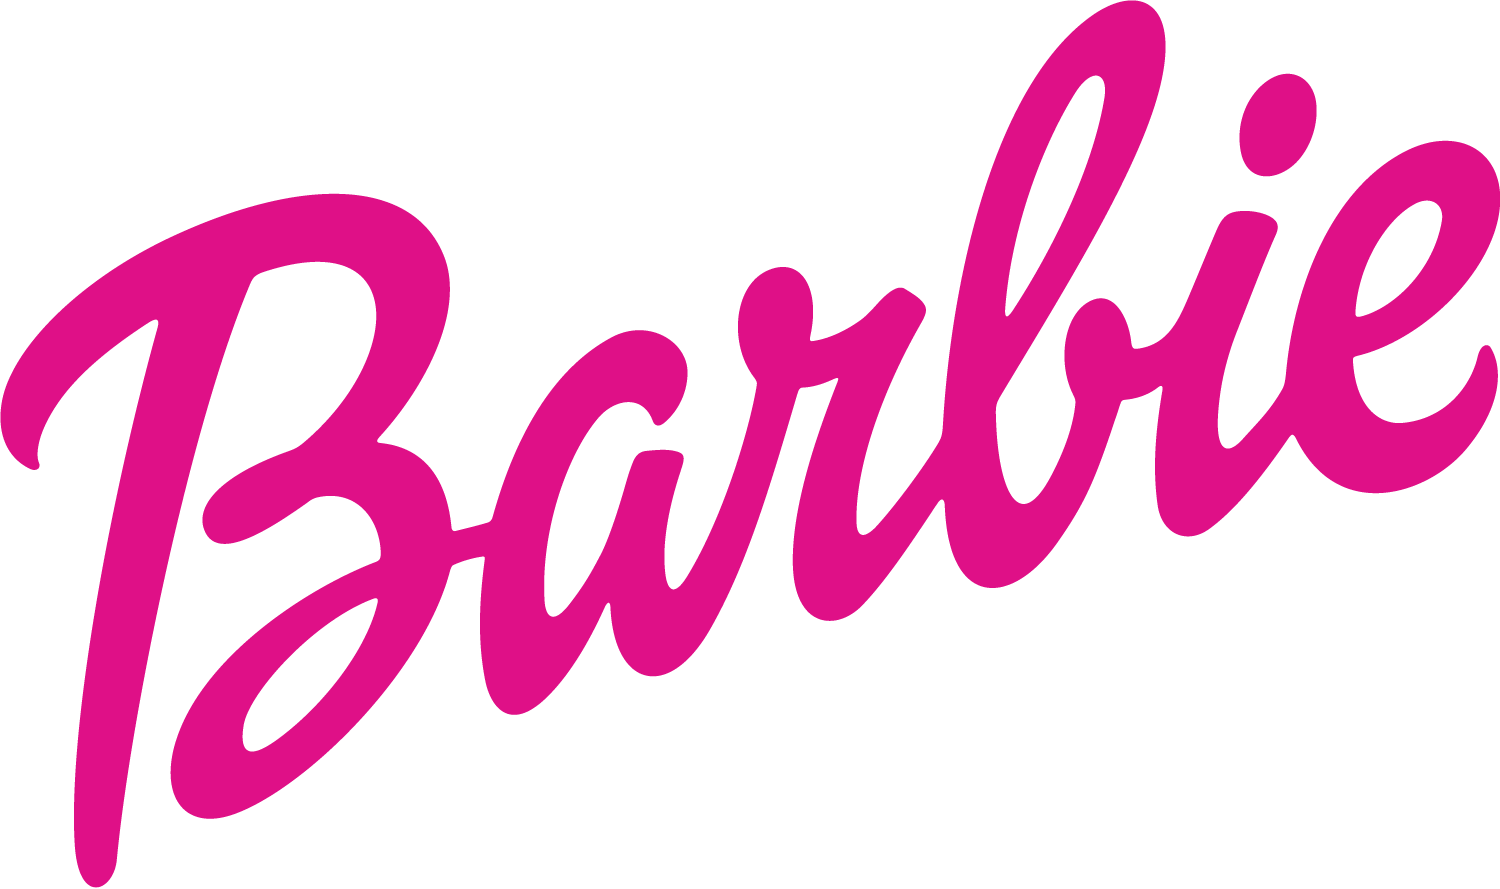 barbie logo png